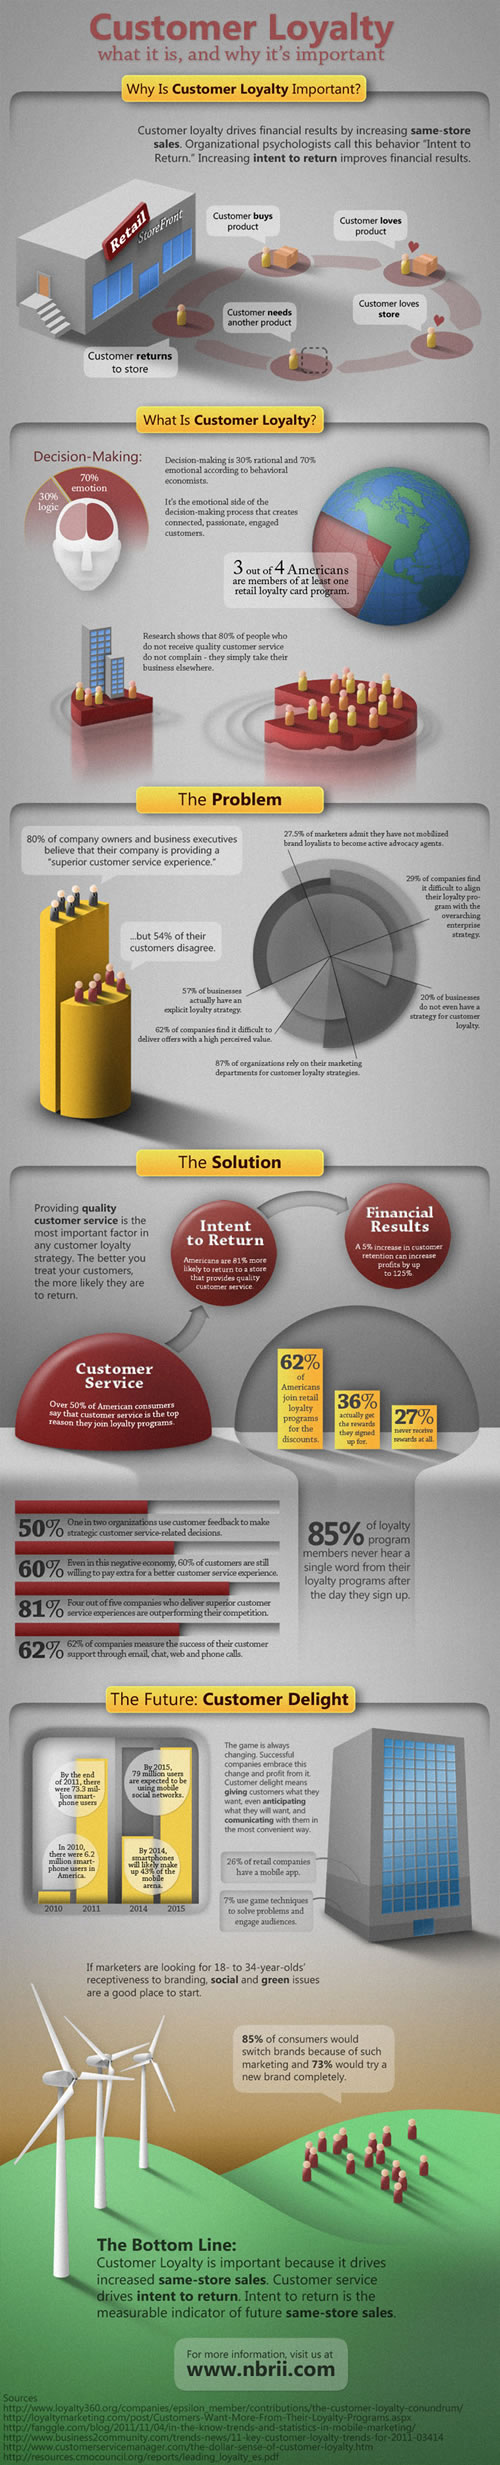 Customer loyalty infographic